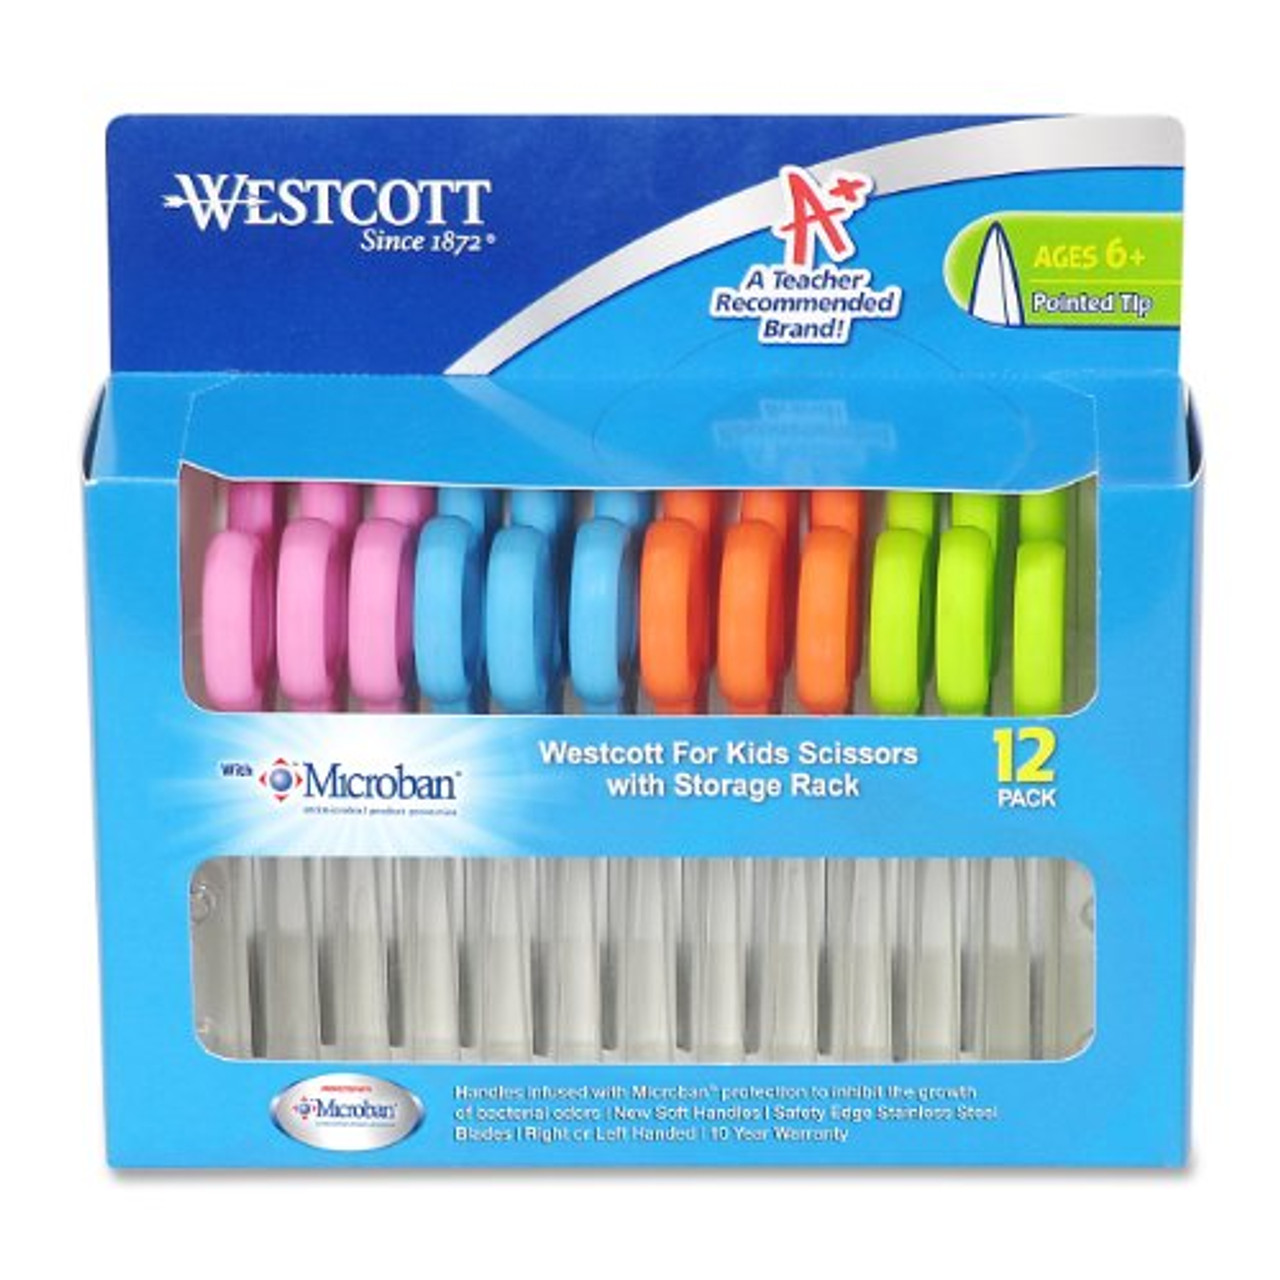 Westcott 5 Pointed Kids Scissors Classpack, 6 Count